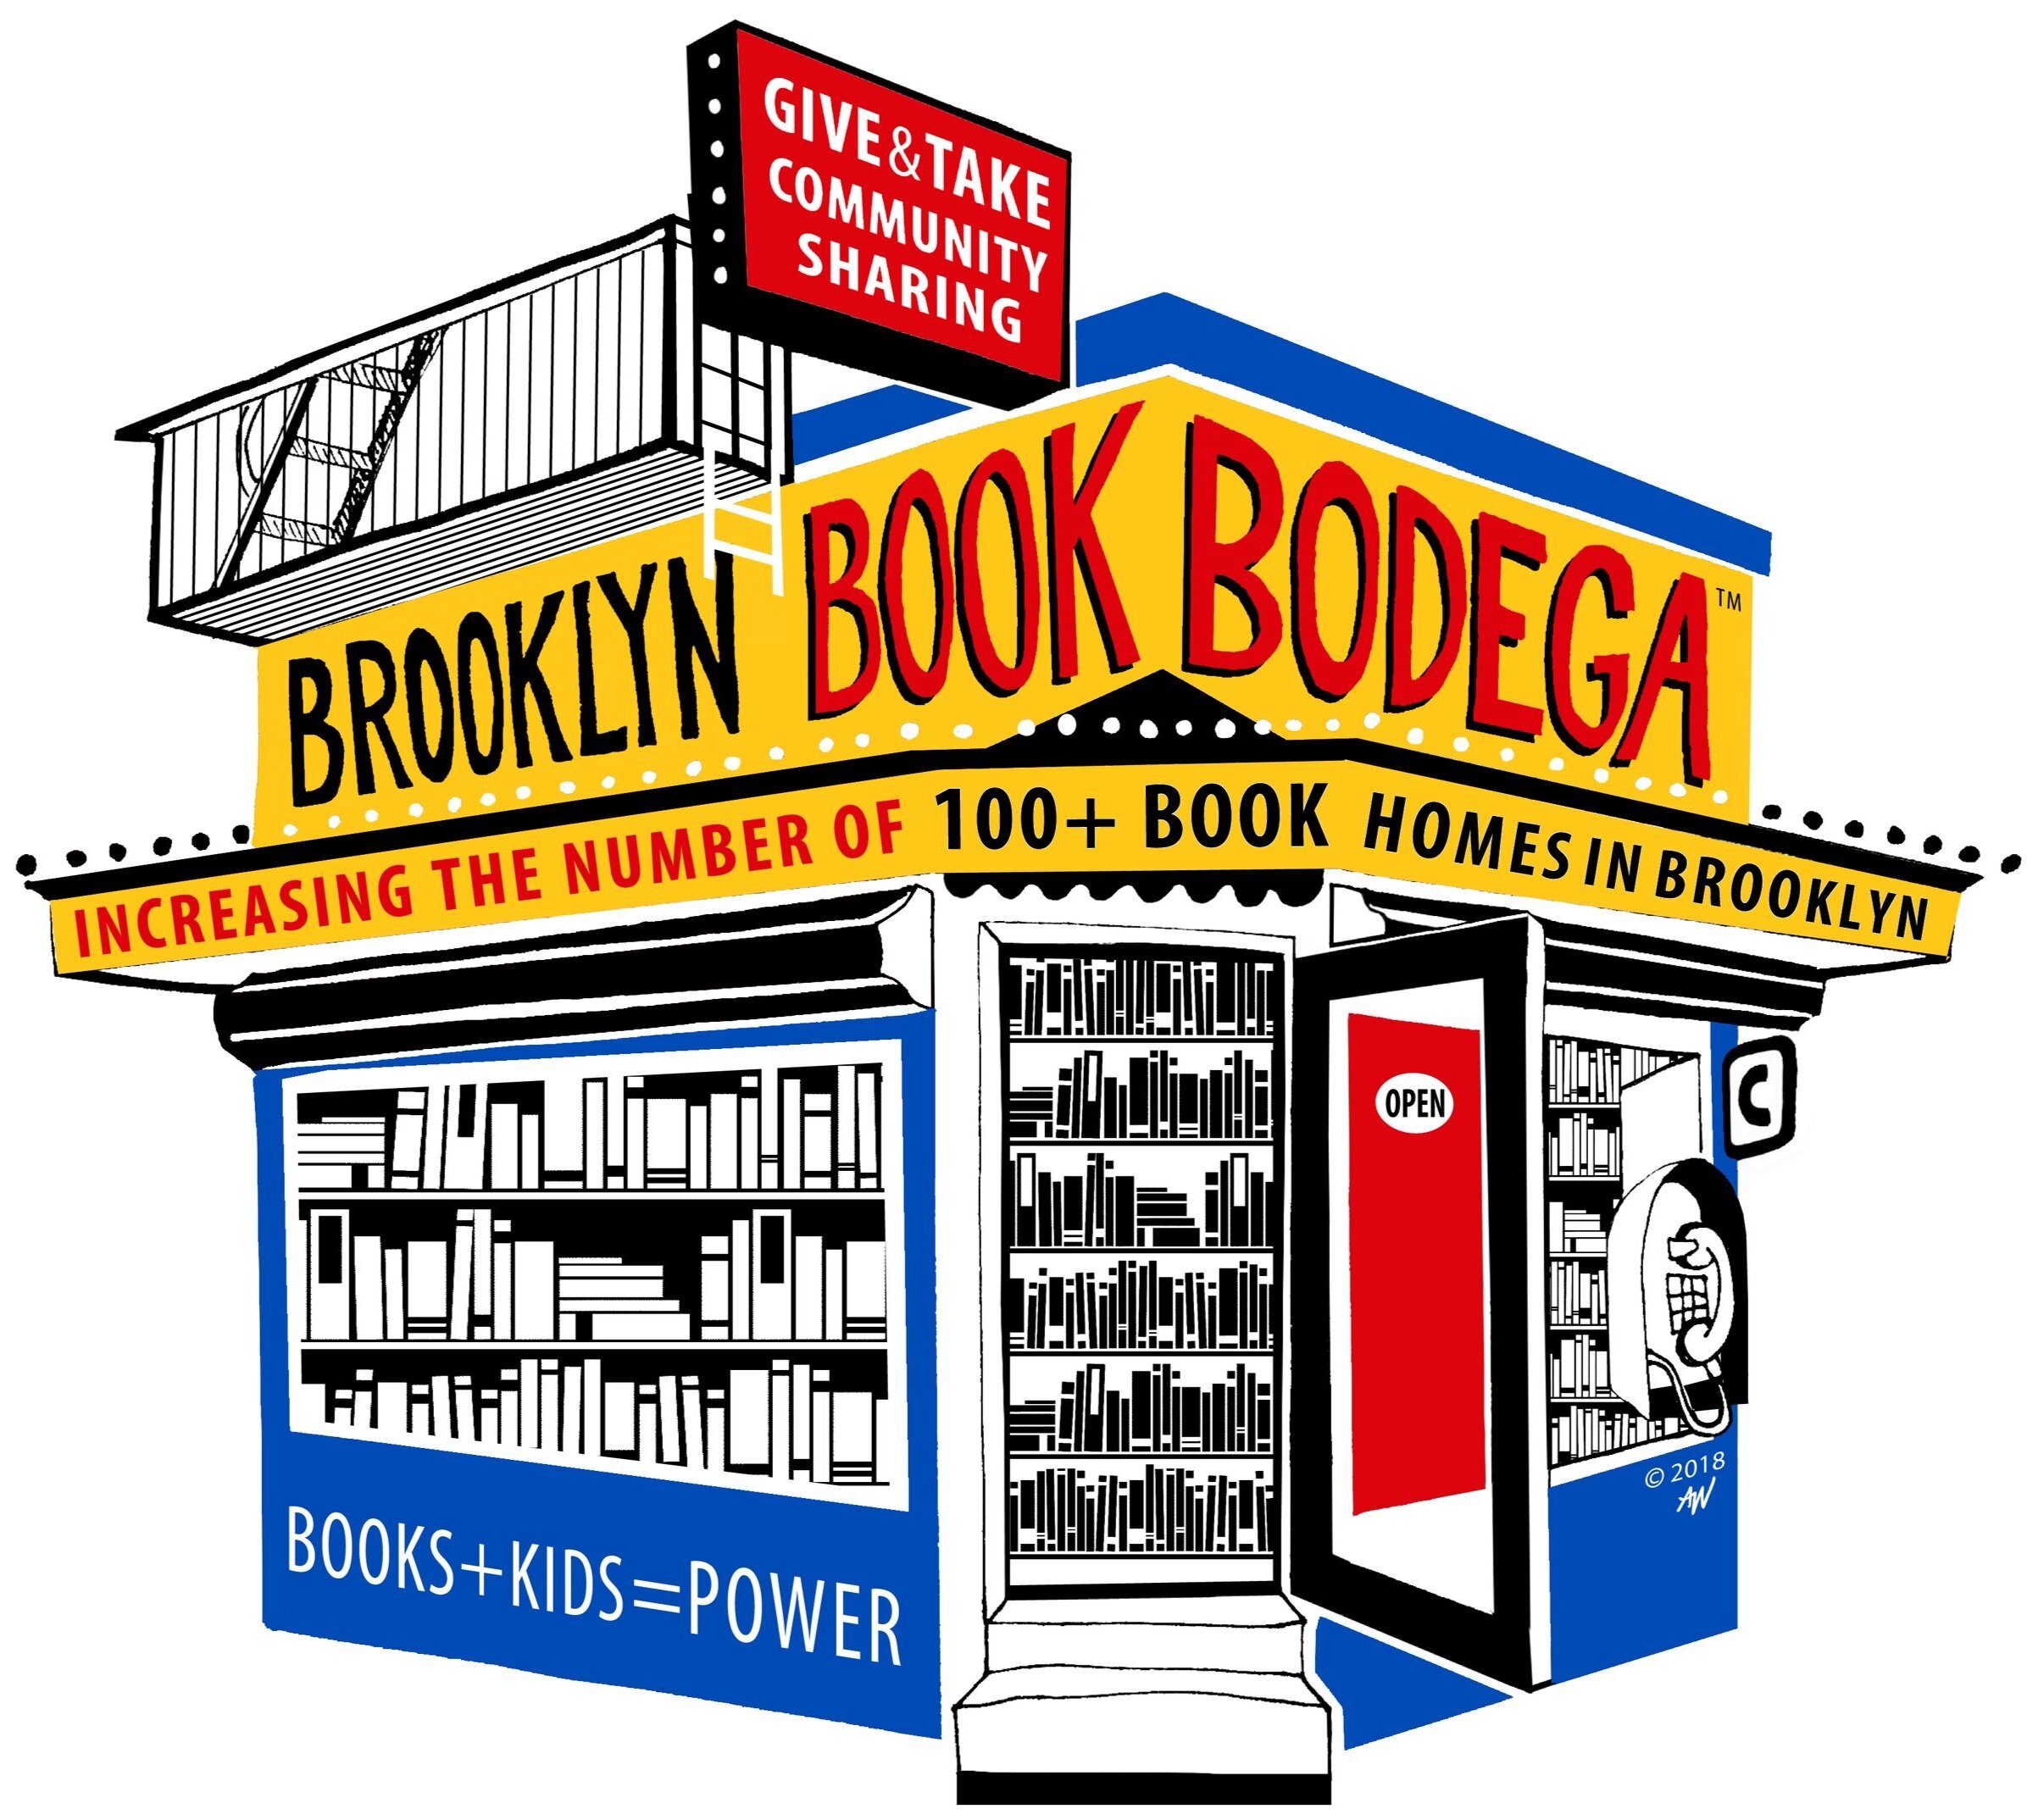 Copy+of+Brooklyn+Book+Bodega+%28final+11.27%29+HR+%281%29.jpg